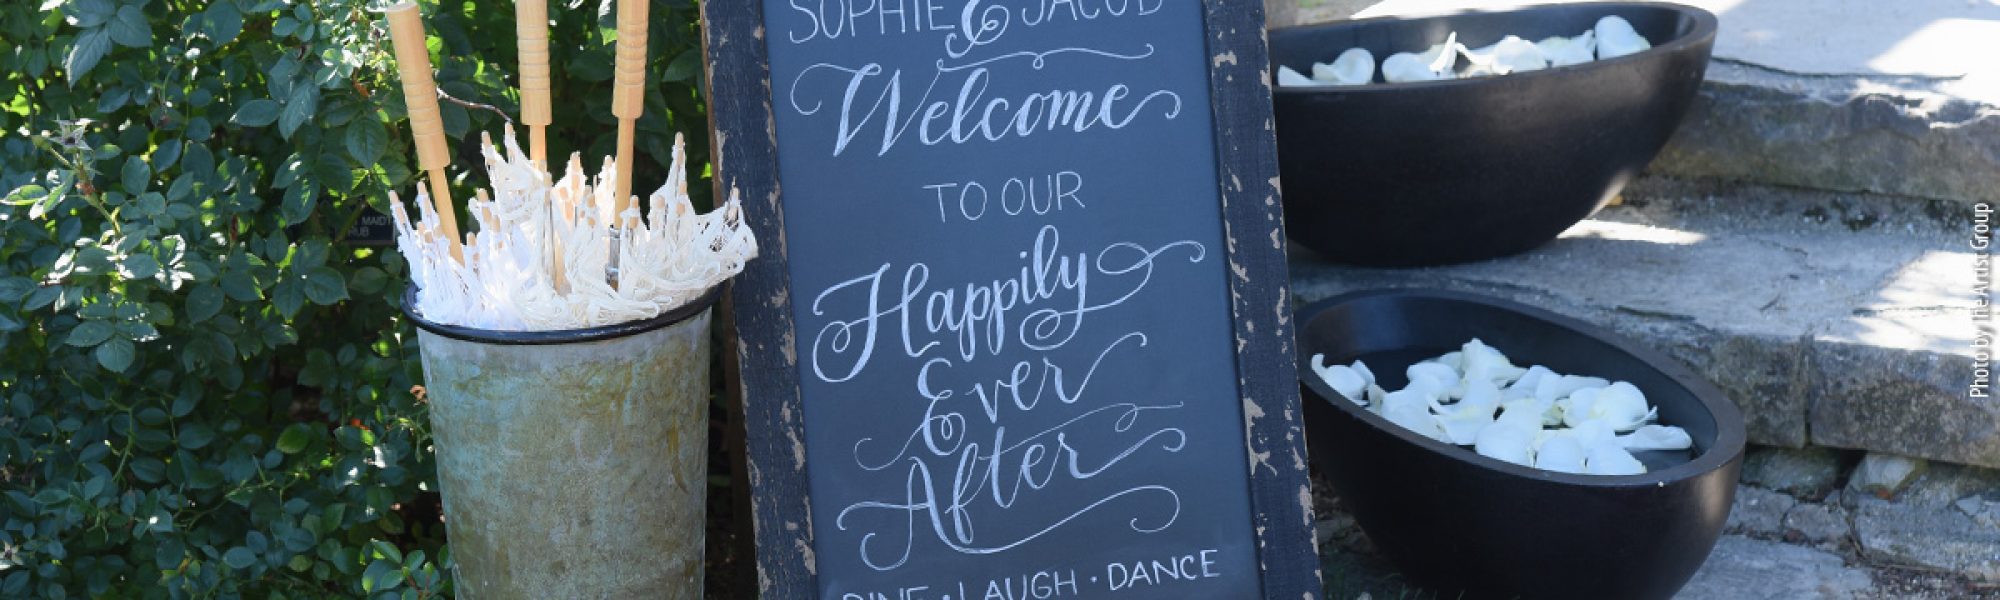 Local Wedding Resources Calligraphy Chalkboard